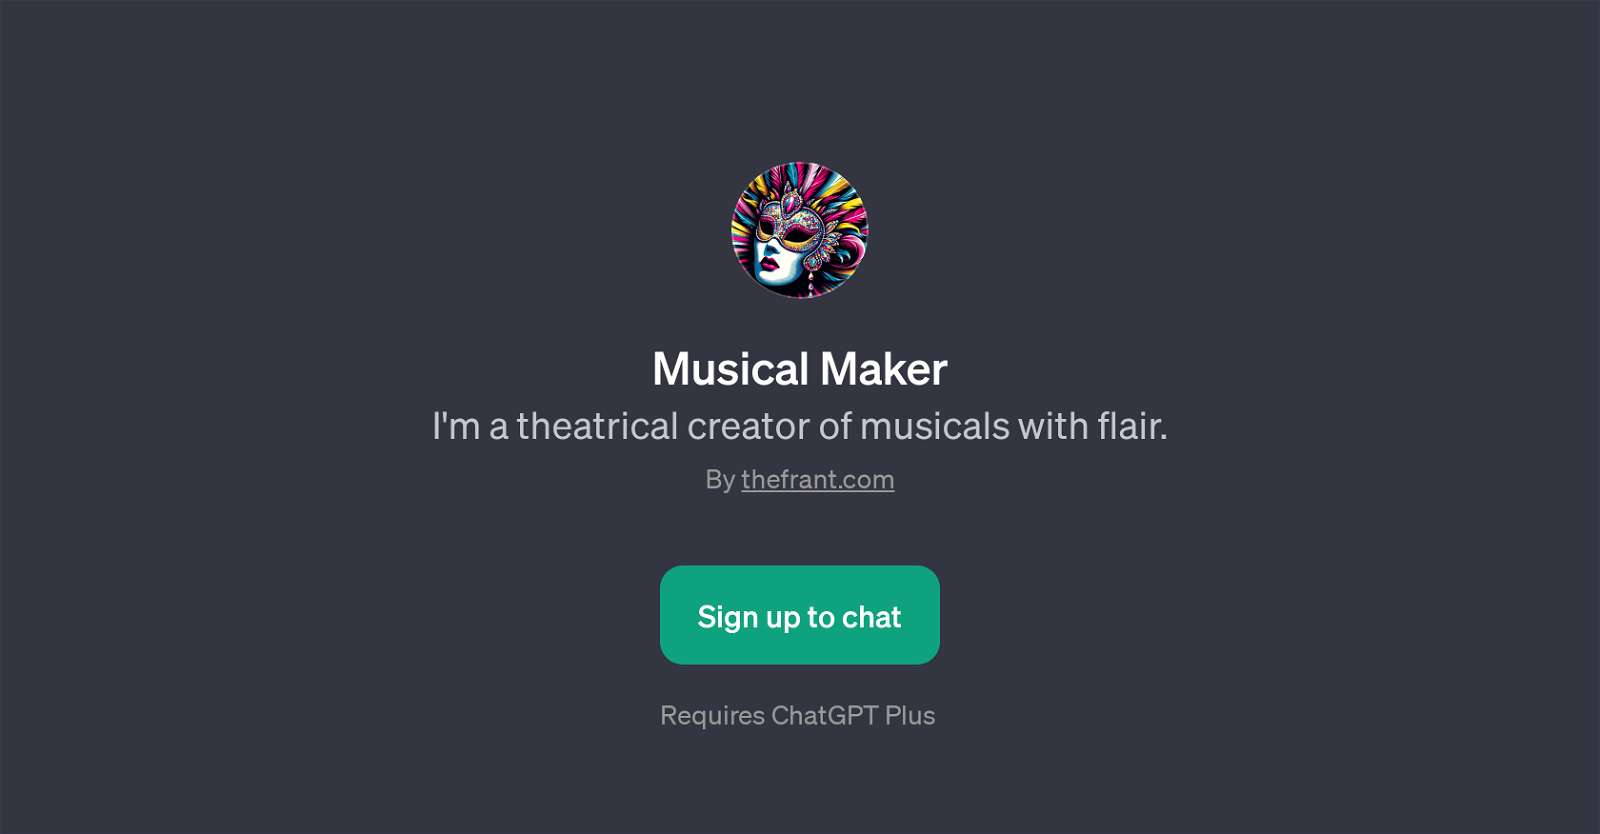 Musical Maker website